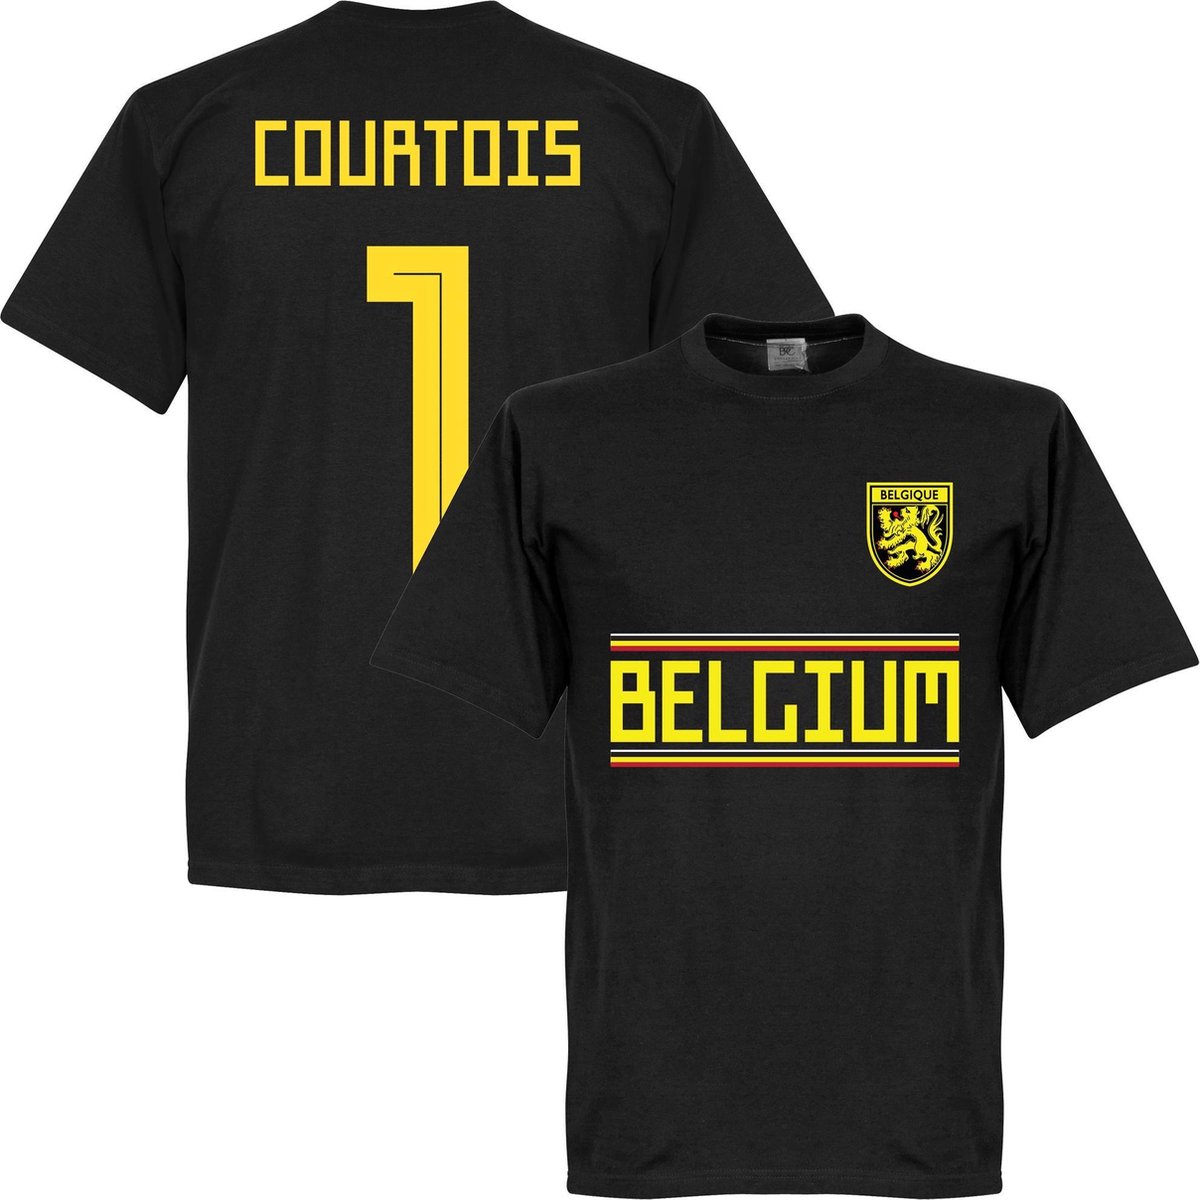 België Courtois 1 Team T-Shirt - XL | bol